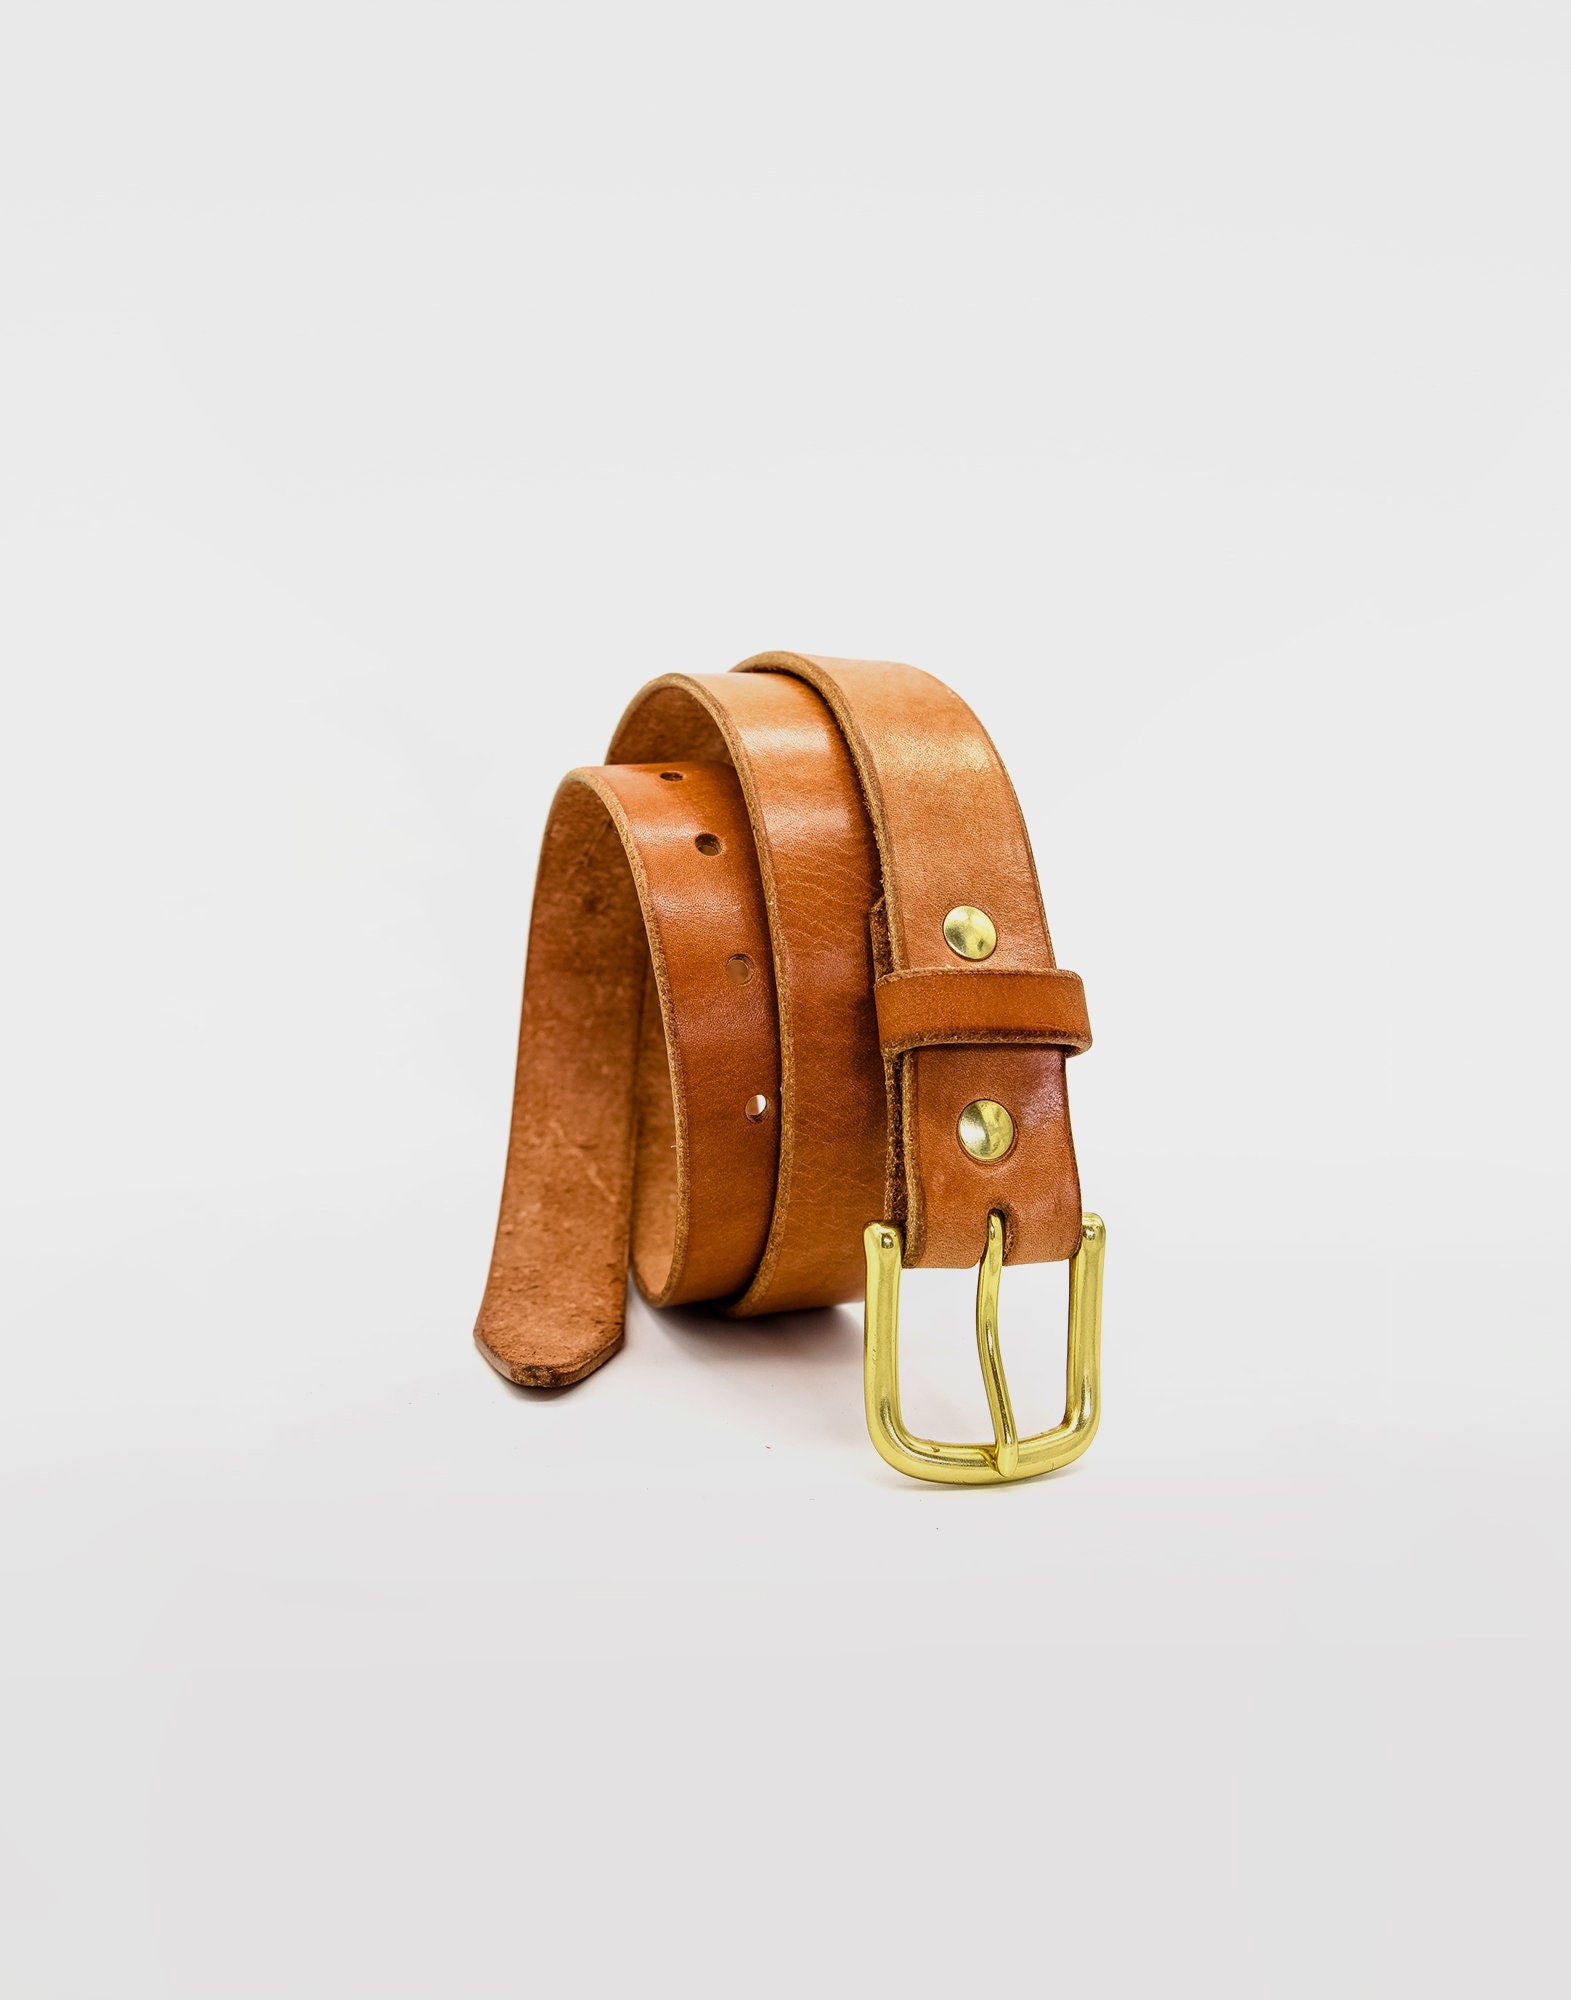 Director’s cut Leather Belt | ‘Living museum’ Veg Tan Leathers (artisan heritage of Spain since 1887) | Lifetime guaranteed